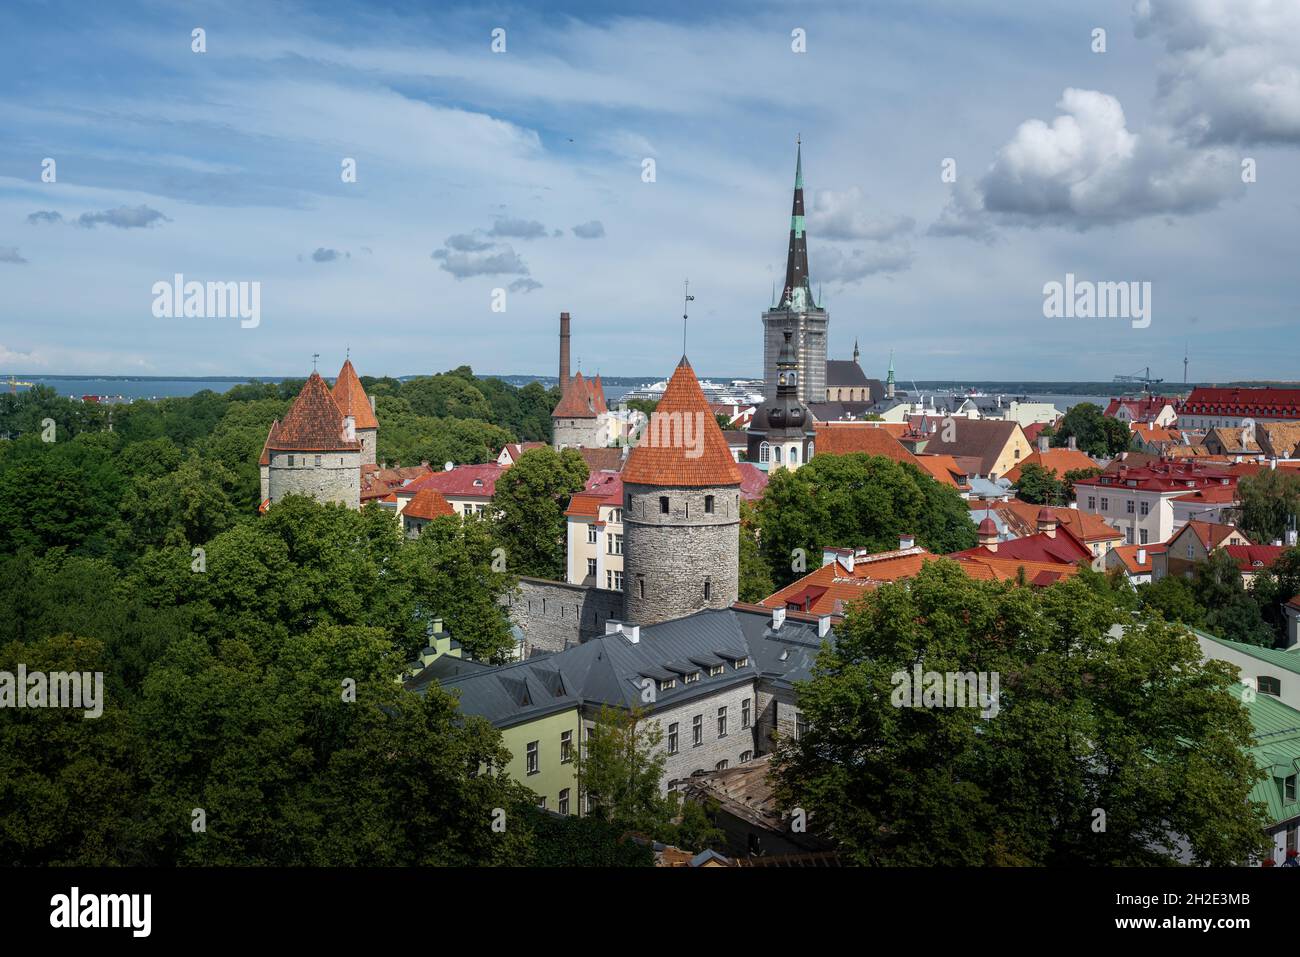 Aerial view of Tallinn with many towers of Tallinn City Wall and St Olaf Church Tower - Tallinn, Estonia Stock Photo